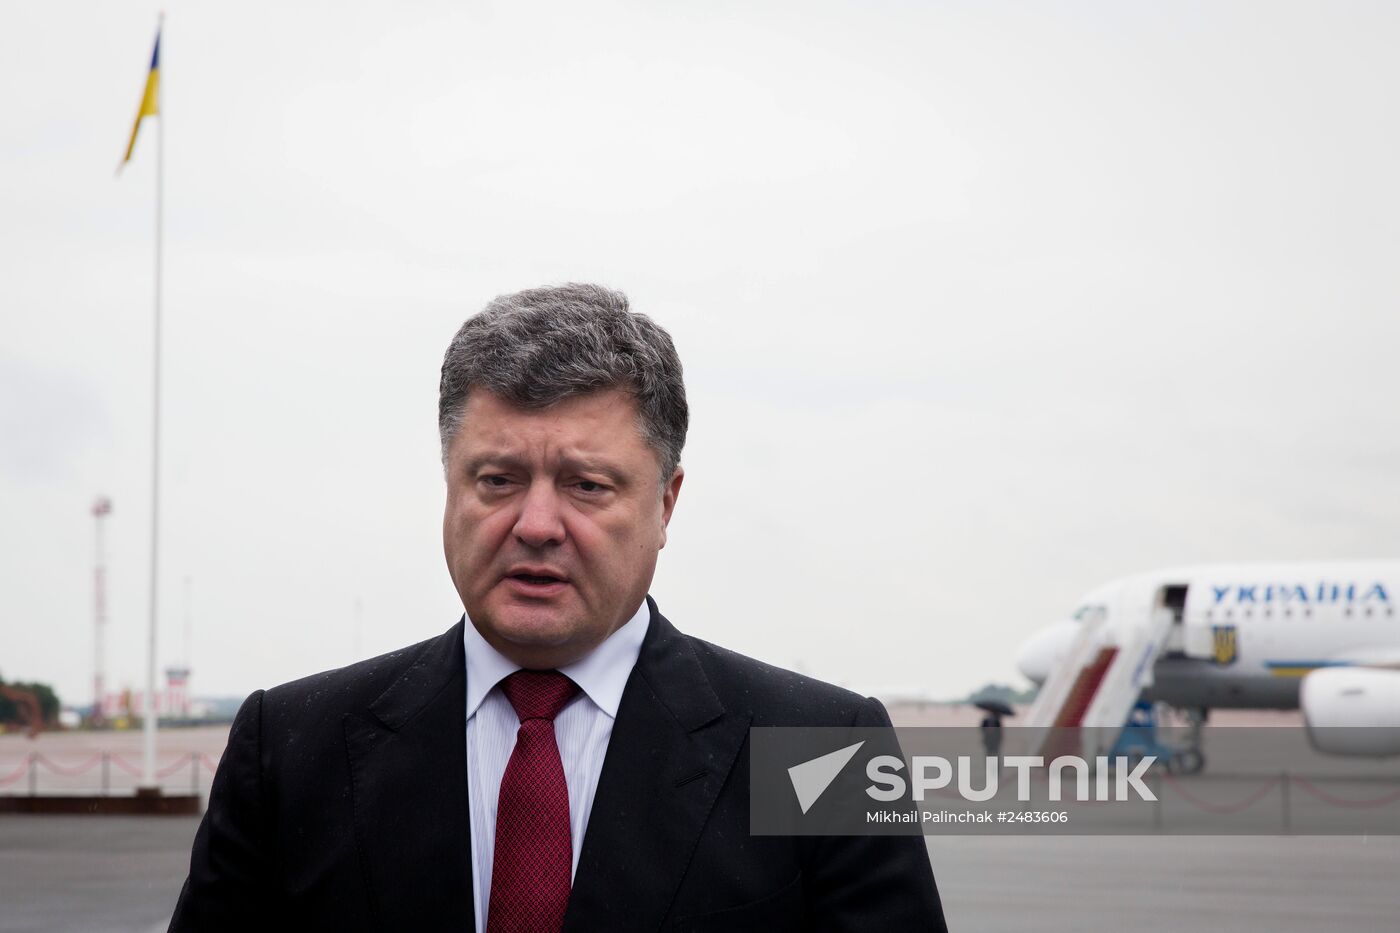 President of Ukraine Petro Poroshenko cancels Turkey visit